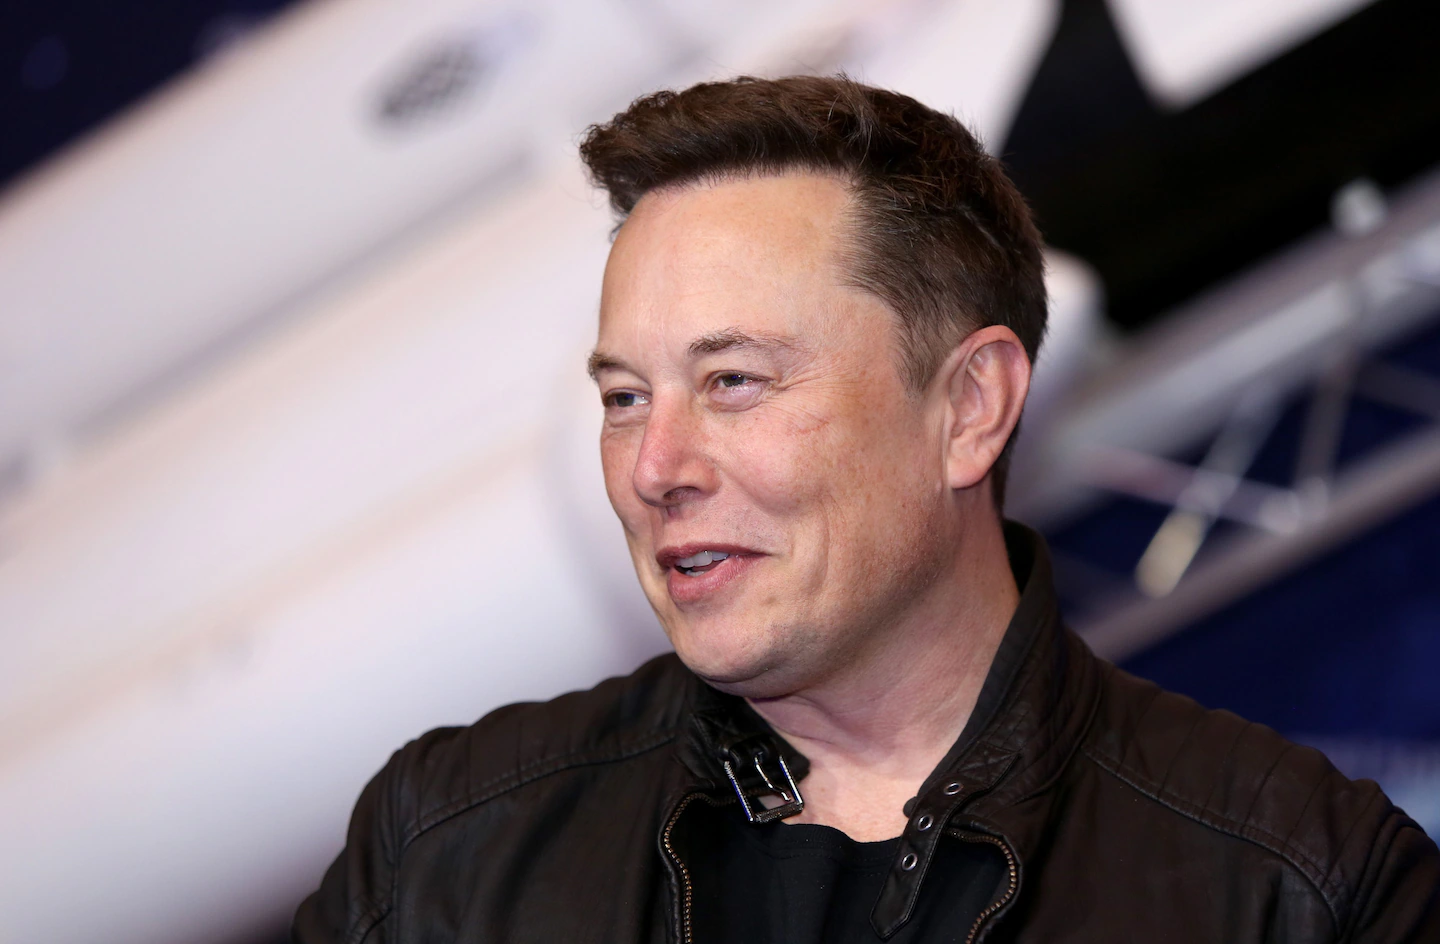 Elon Musk made $156 million by breaking SEC rules